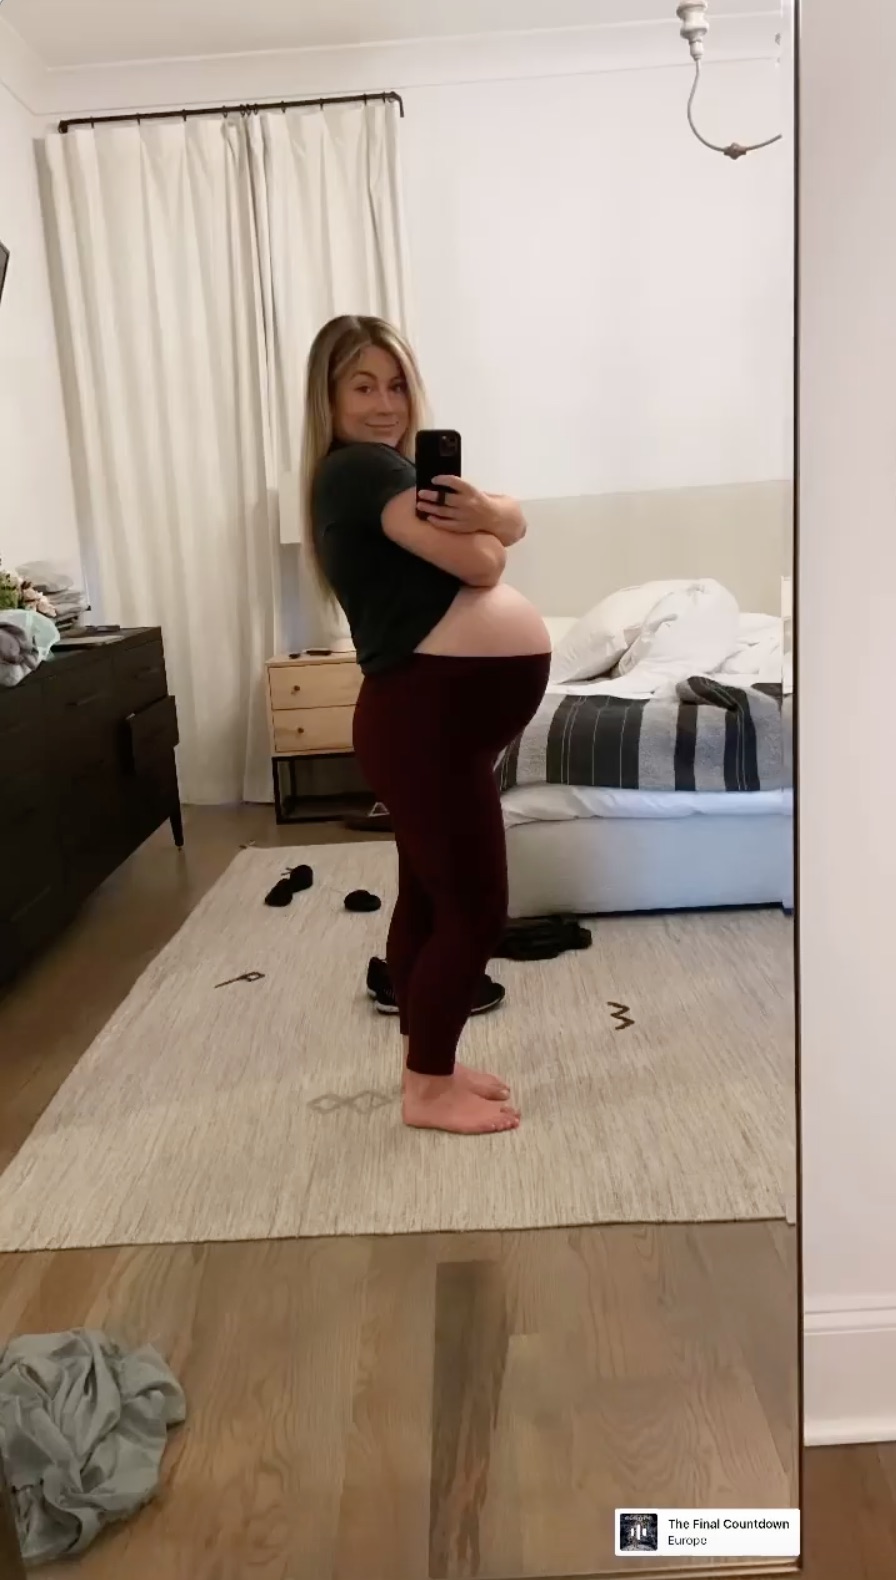 The Final Countdown!' Pregnant Shawn Johnson Shows Baby Bump Progress